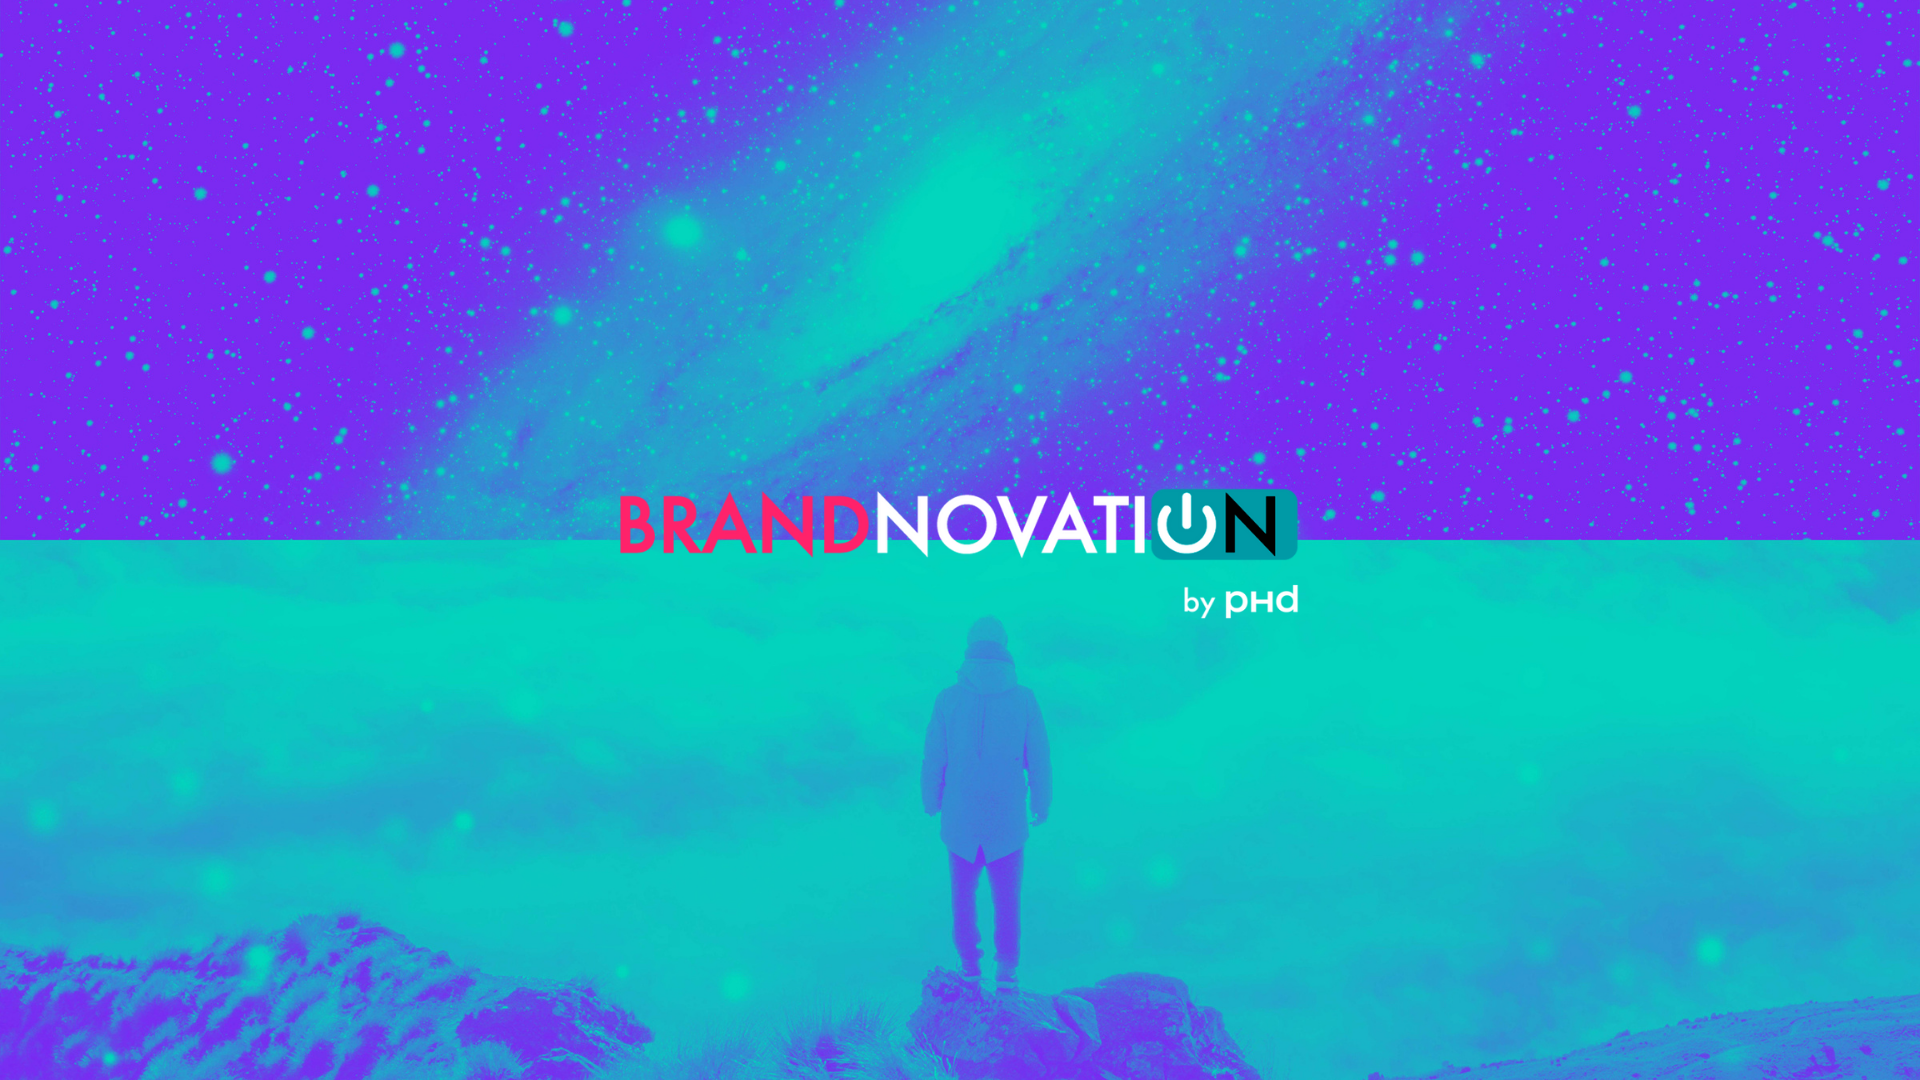 Brandnovation